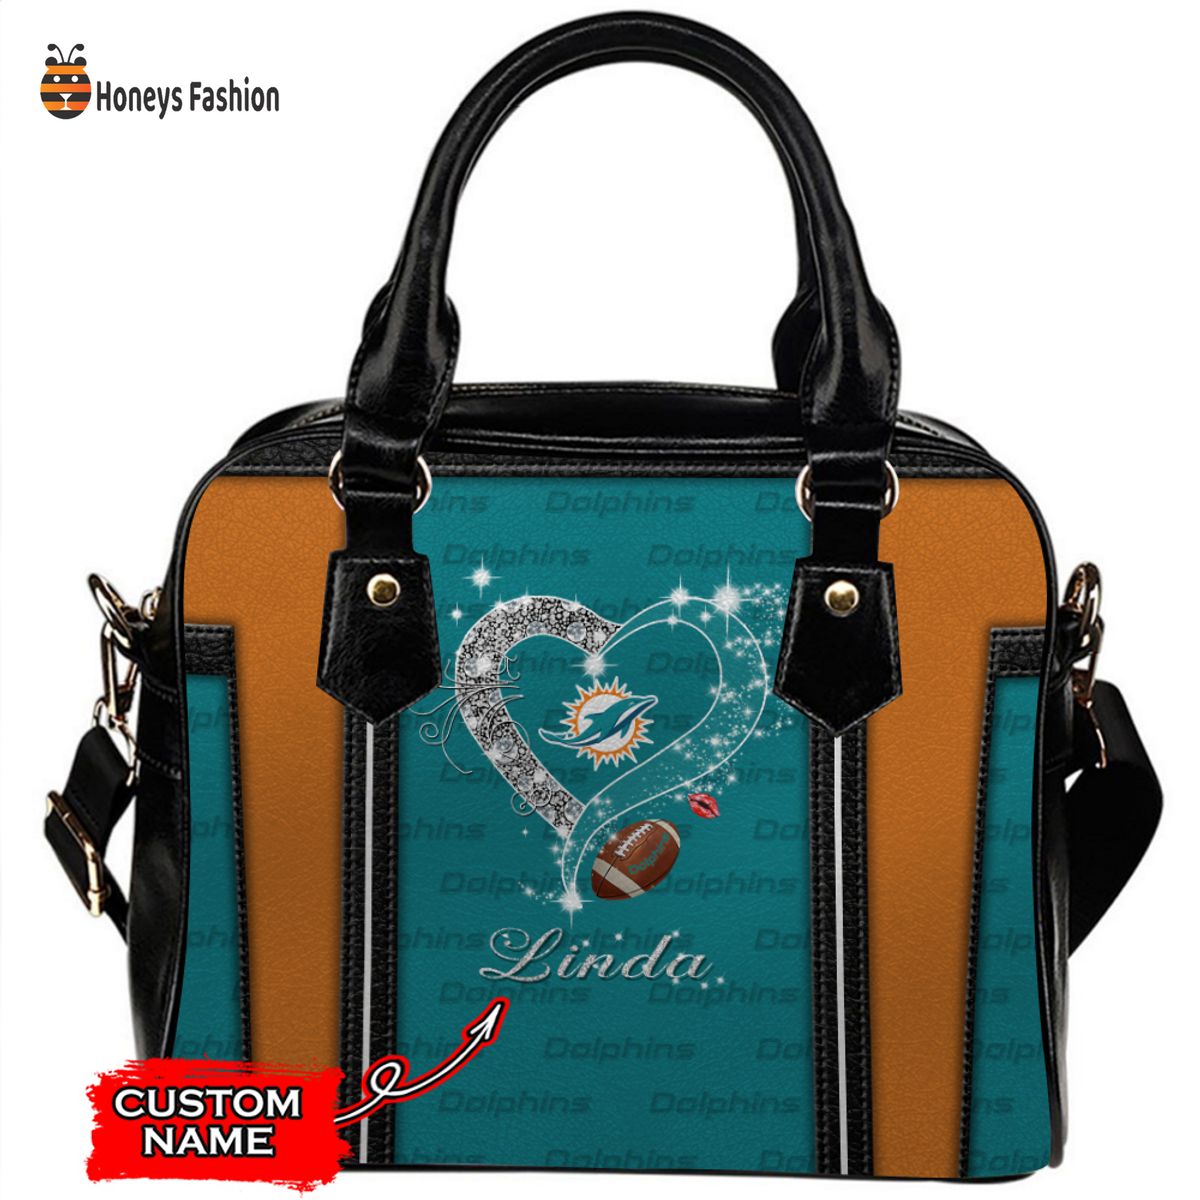 Miami Dolphins NFL Custom Name Leather Handbag Tote bag